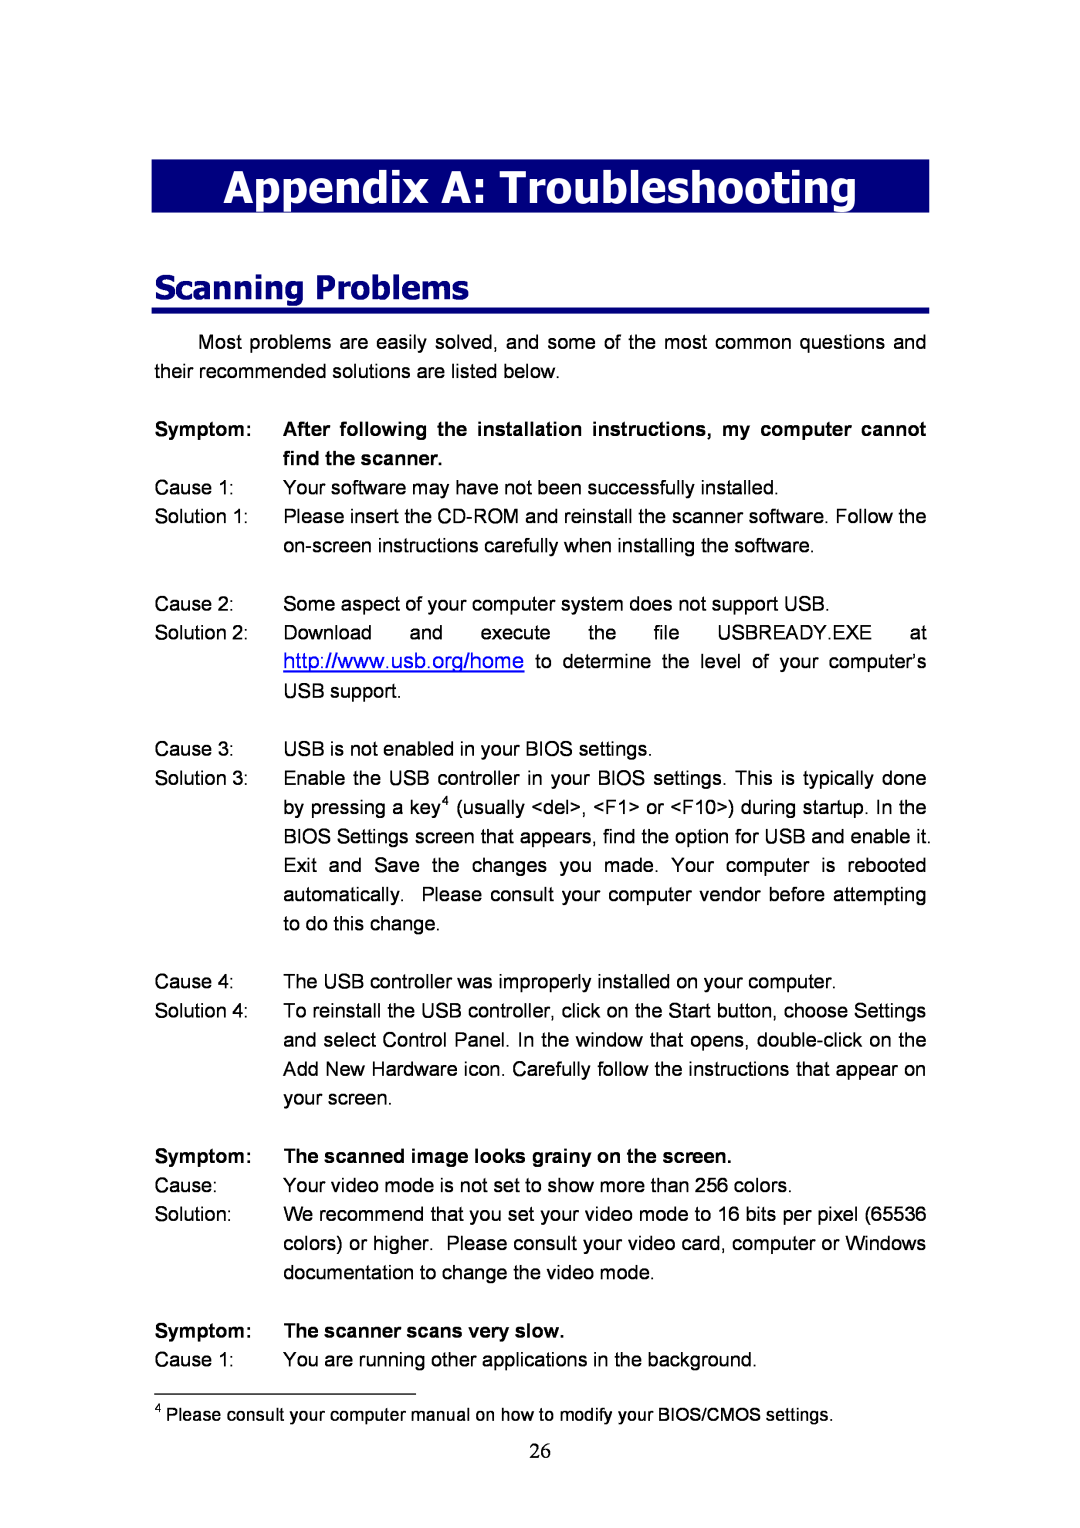 Plustek D600, MobileOffice Scanner manual Appendix A Troubleshooting, Scanning Problems 